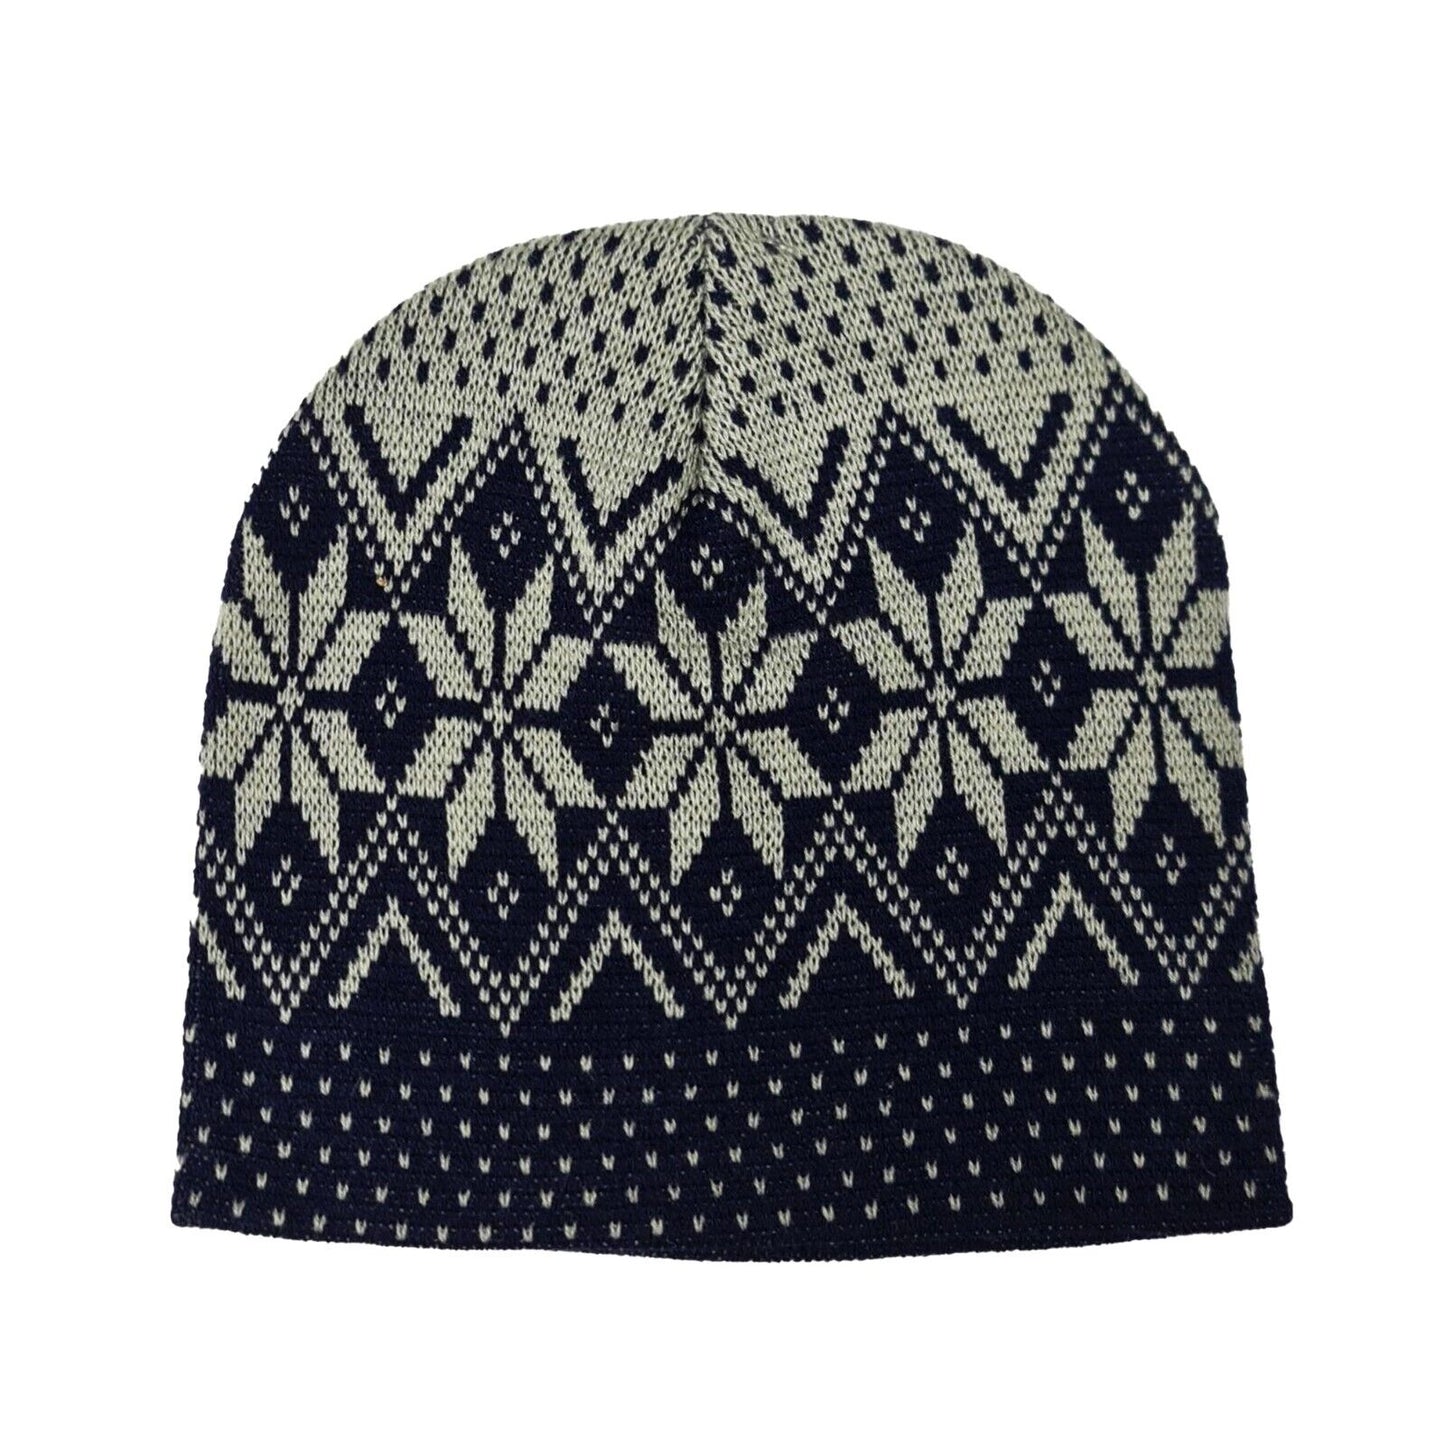 Adult Winter Snow Beanie Hat